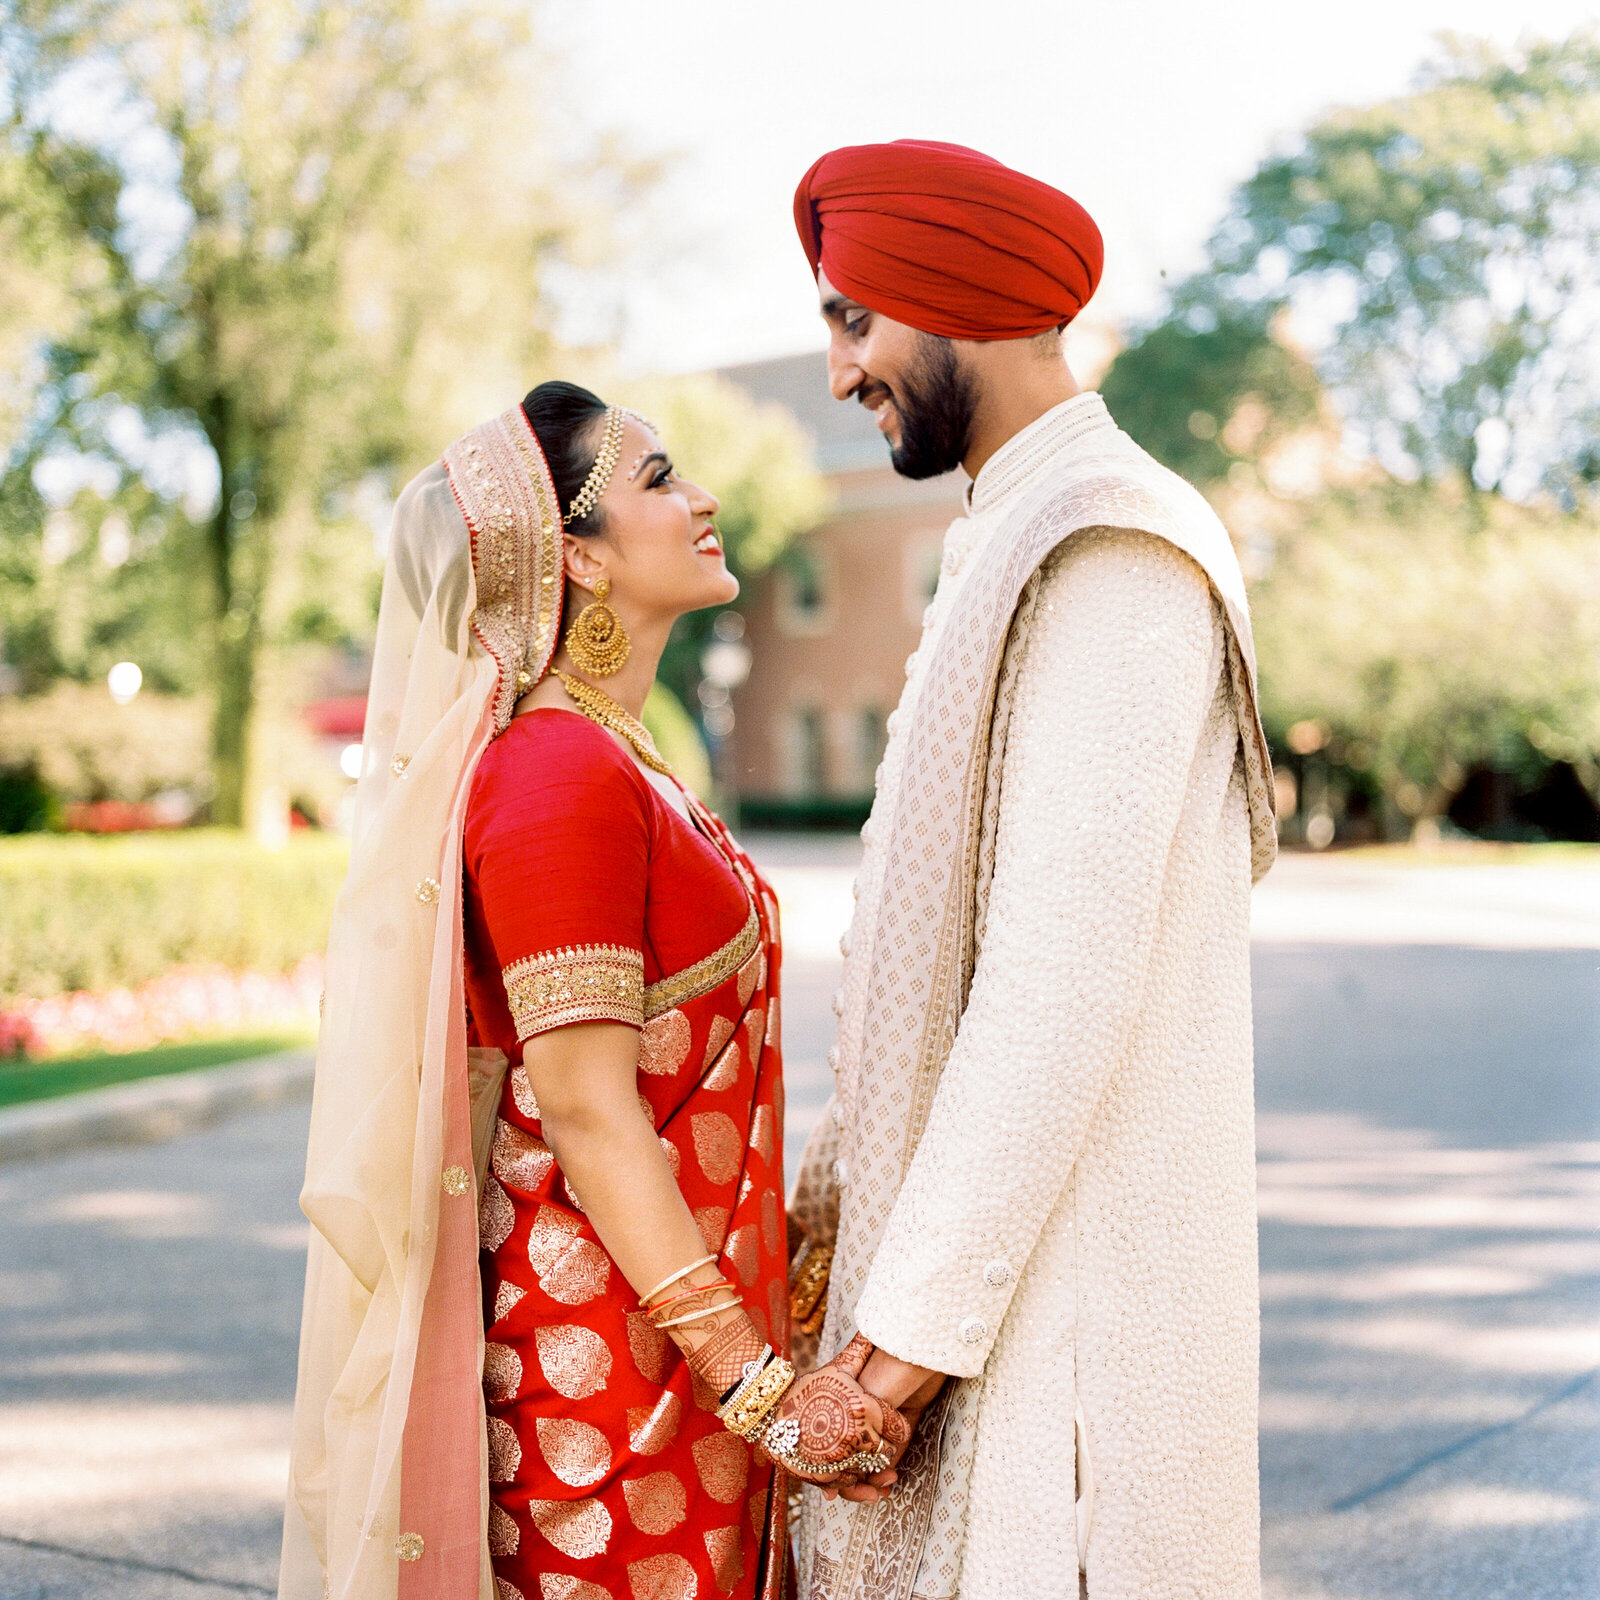 033-sean-cook-wedding-photography-sikh-wedding-couple